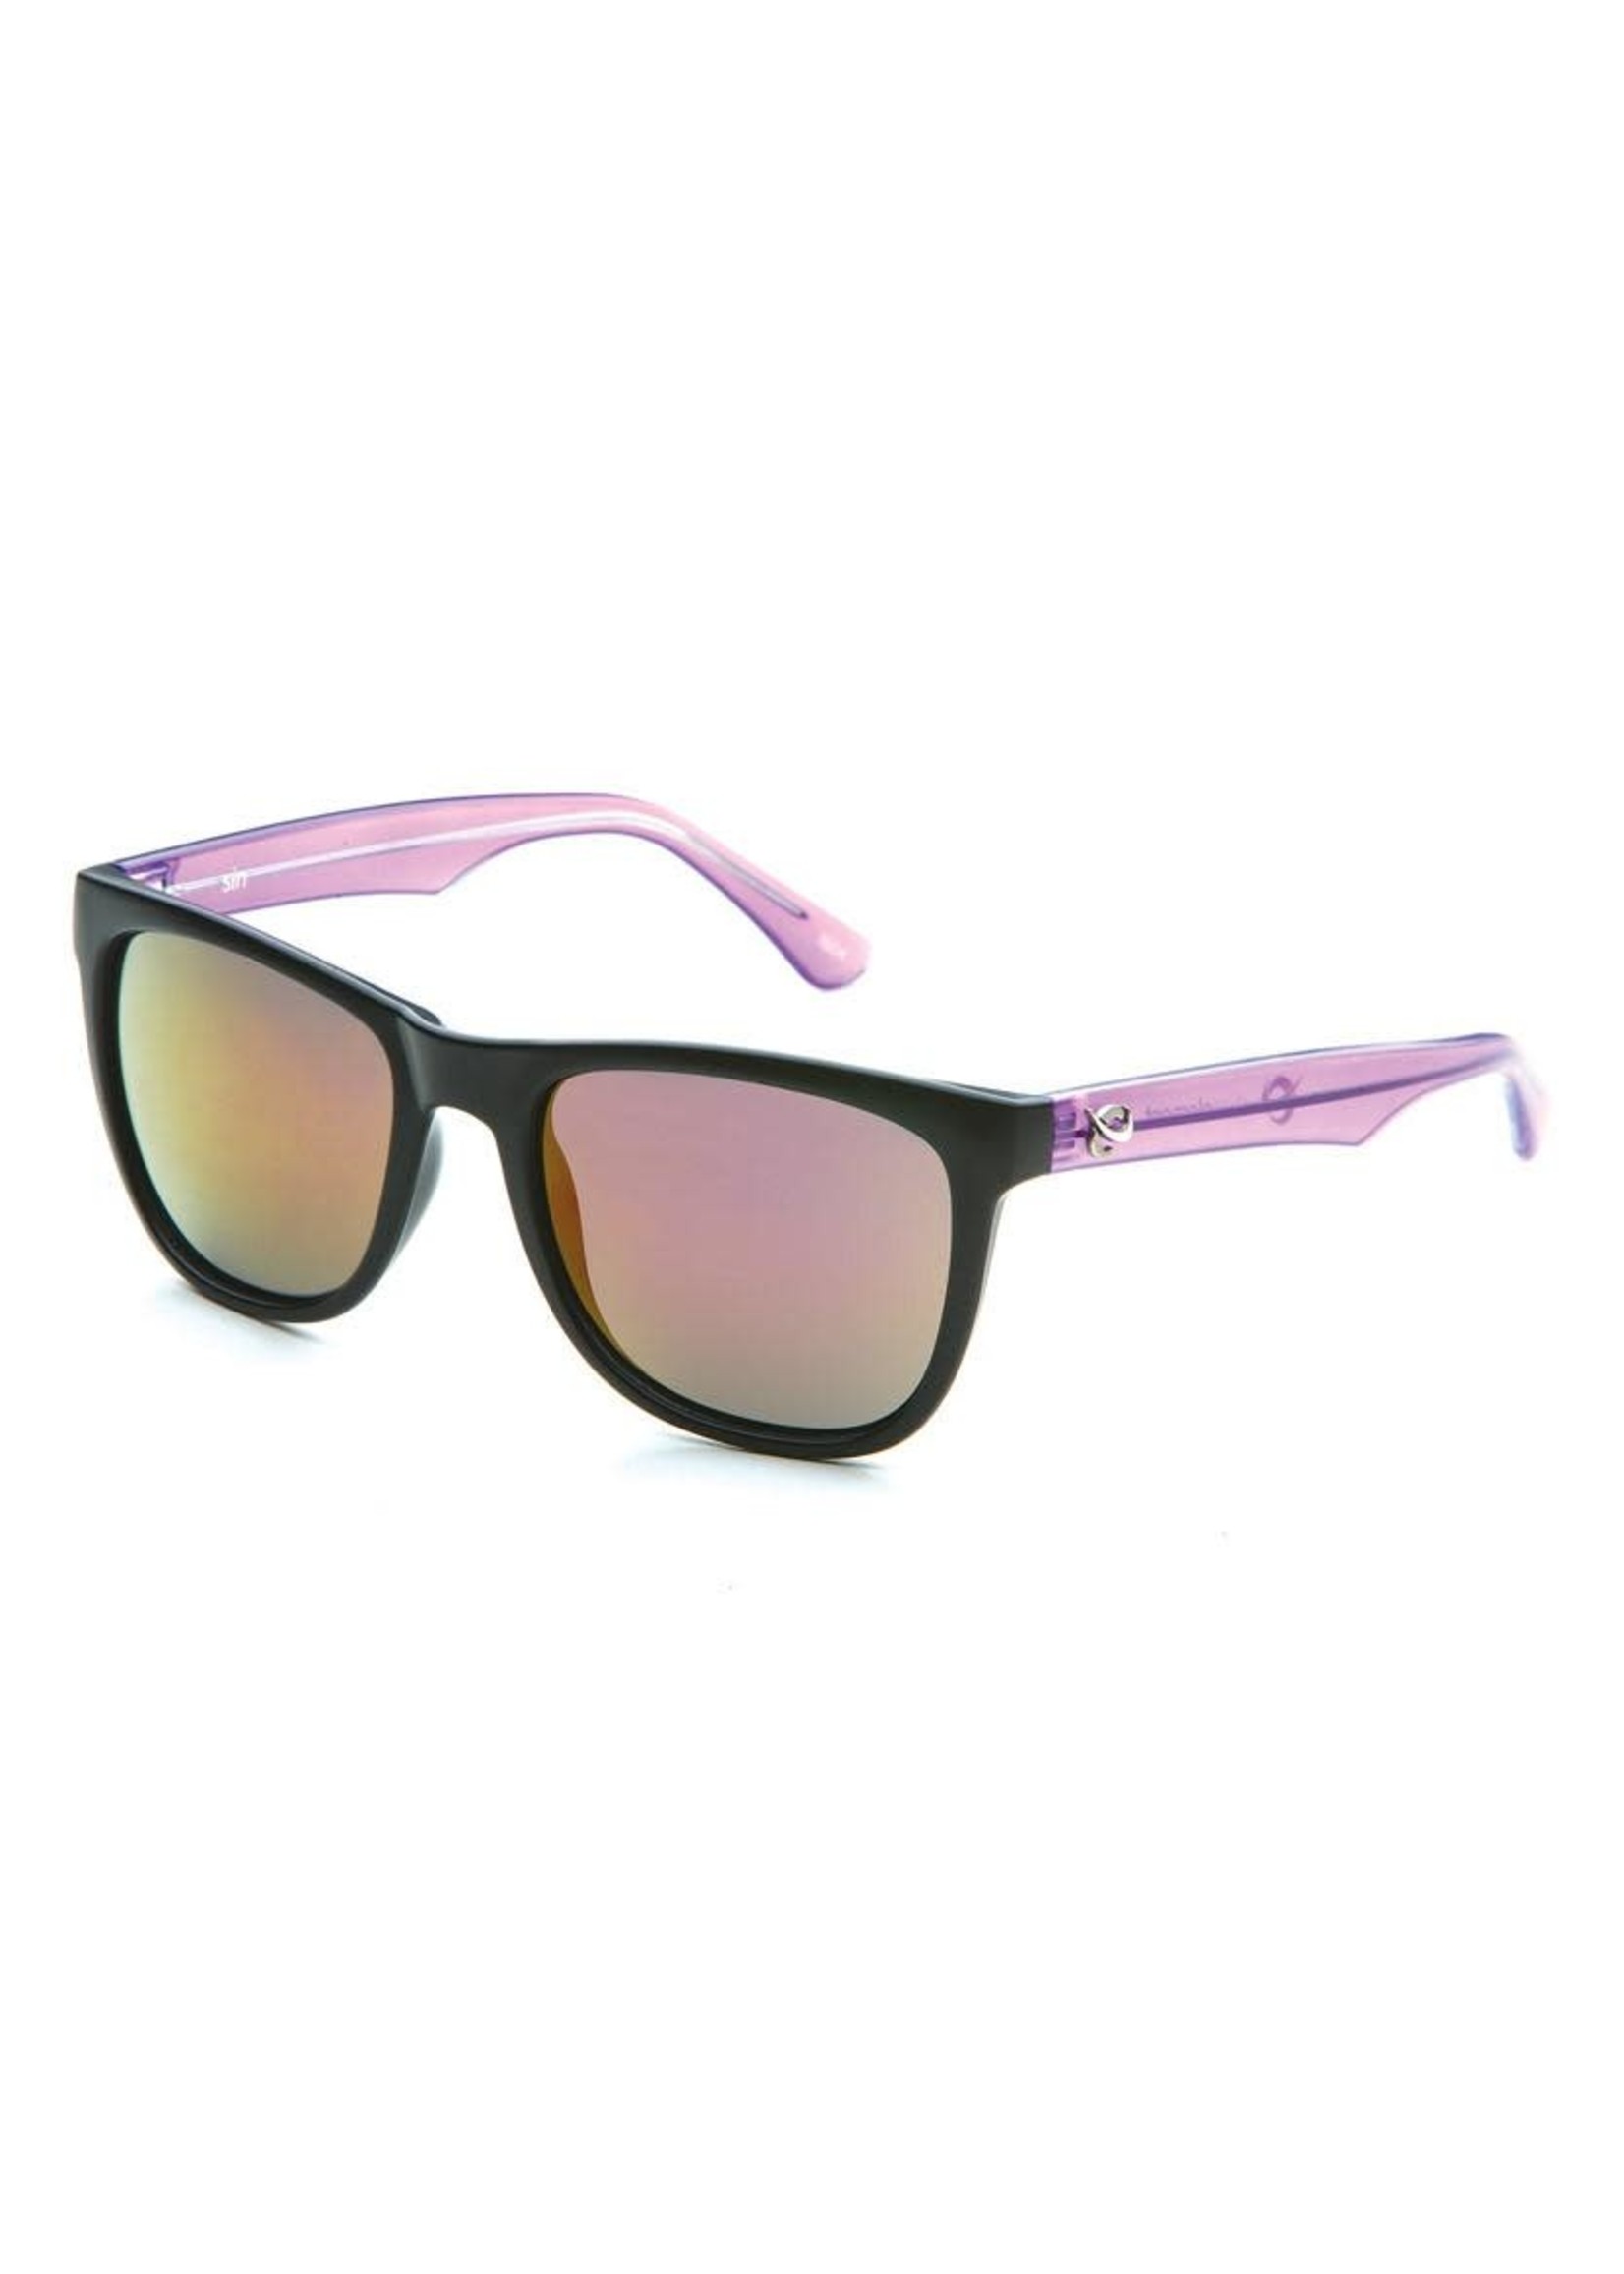 Urban Element Urban Element Premium Sport Sunglasses Women's